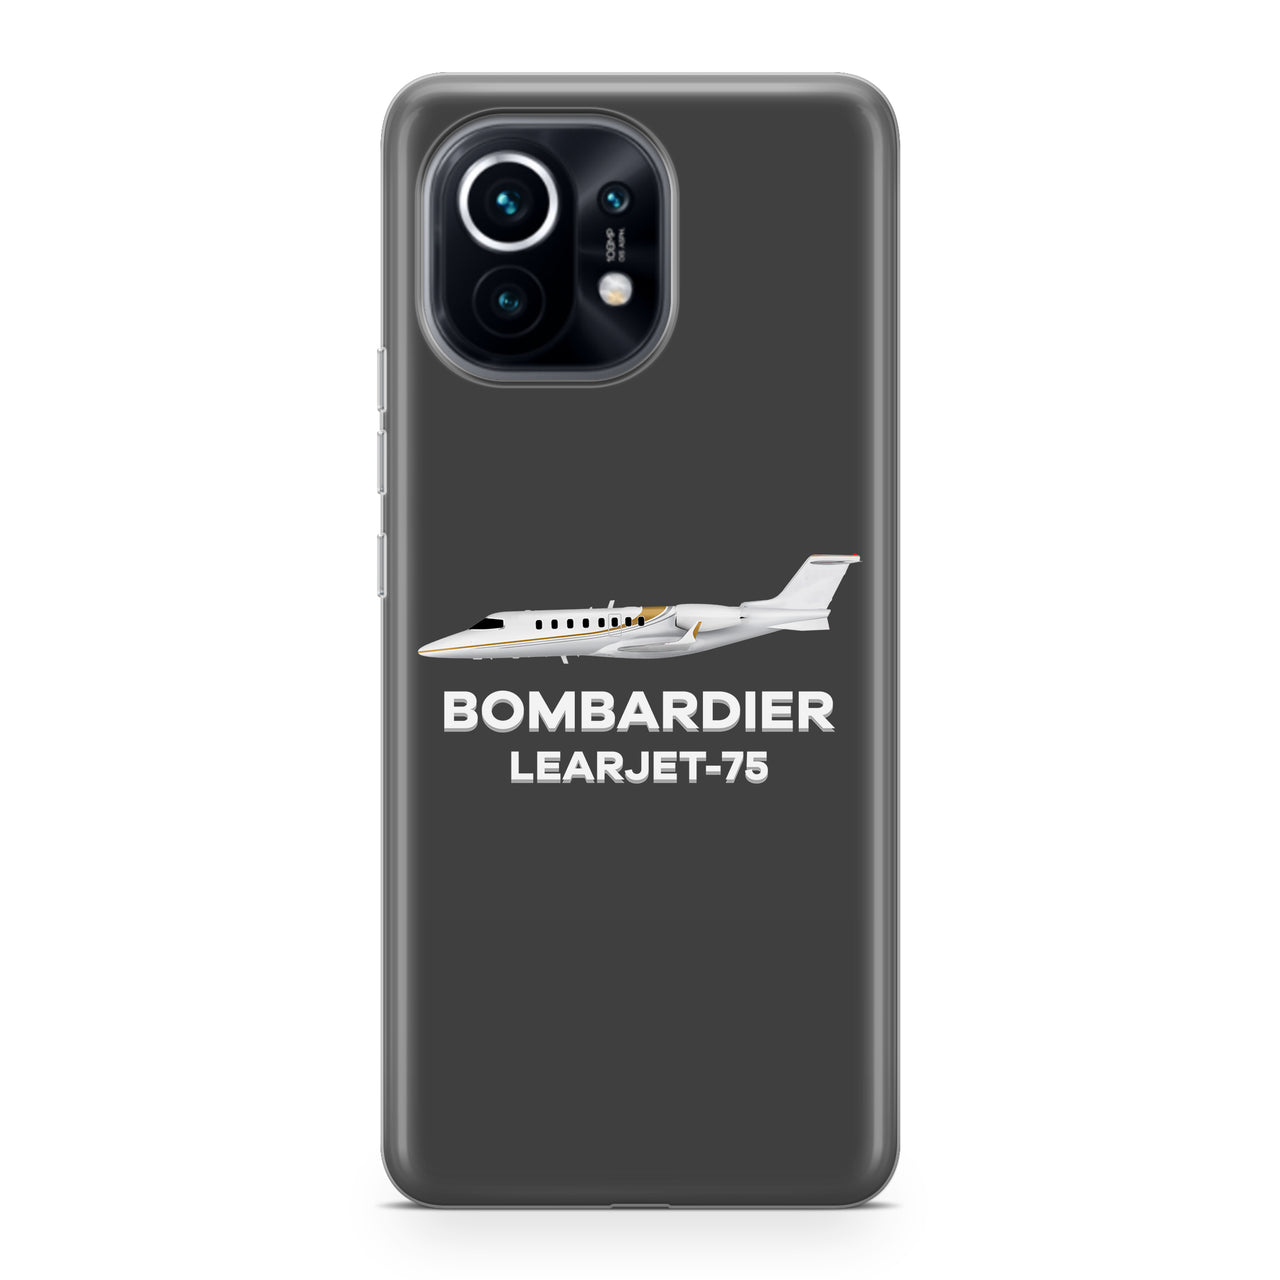 The Bombardier Learjet 75 Designed Xiaomi Cases